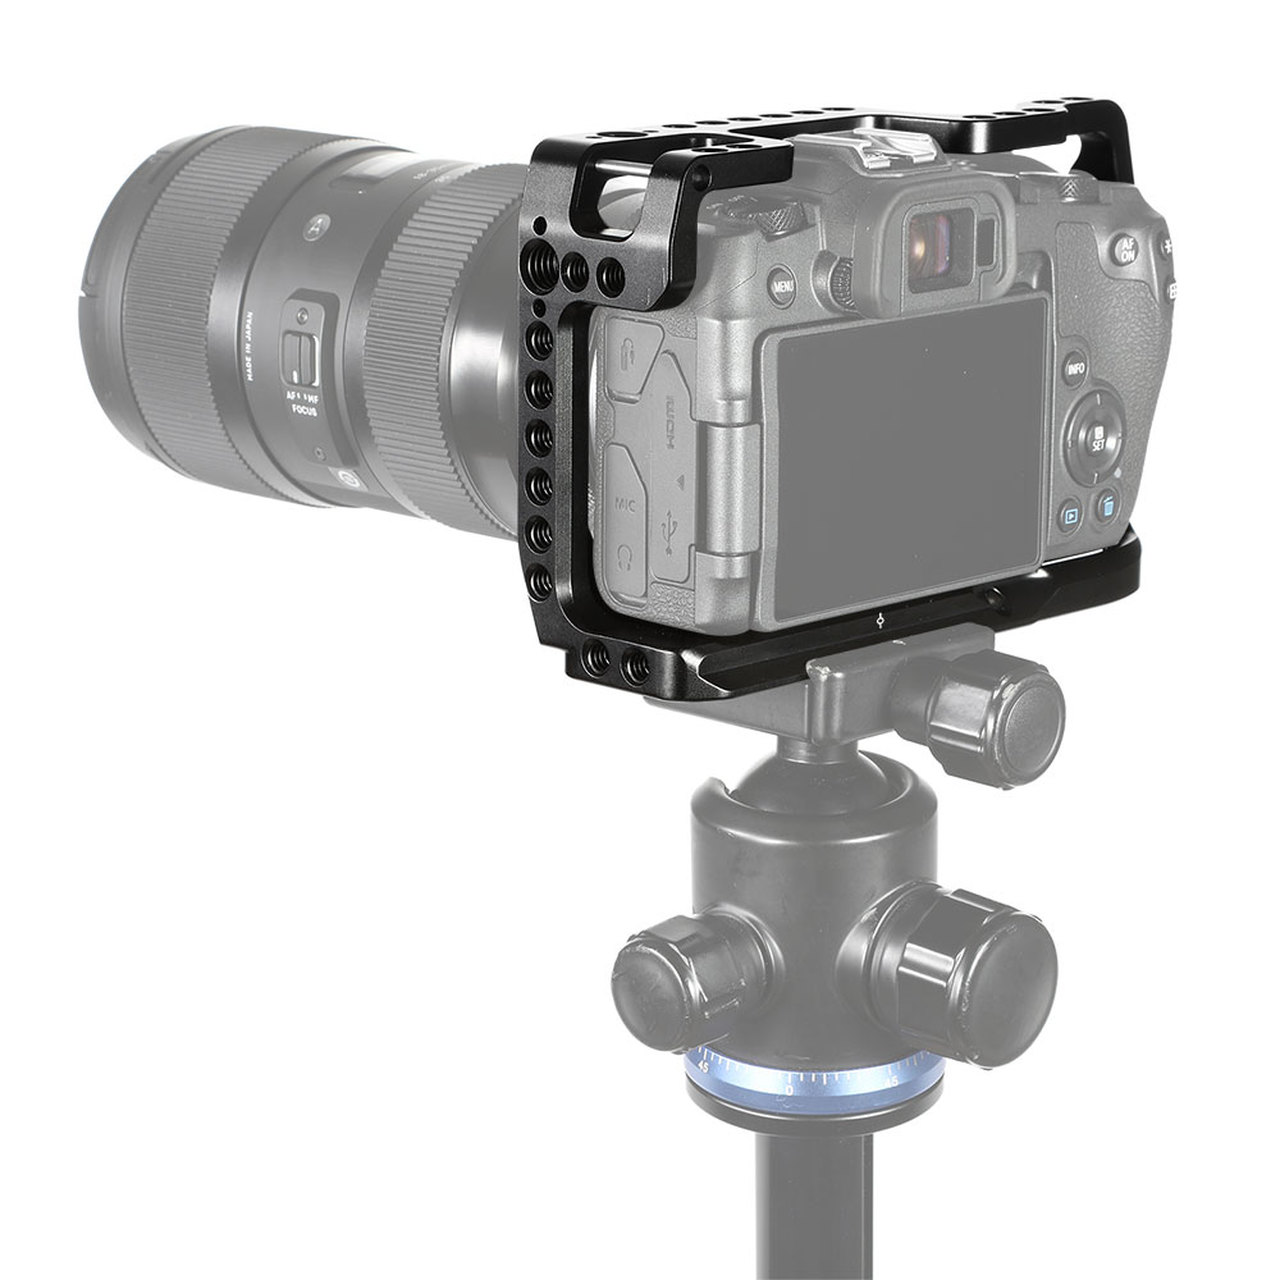 SmallRig Cage for Canon EOS RP CCC2332 ชุดริกสำหรับกล้อง Canon EOS RP Arri สำหรับติดอุปกรณ์เสริม ฐานด้านล่างเพลท Arca ราคา 2650 บาท